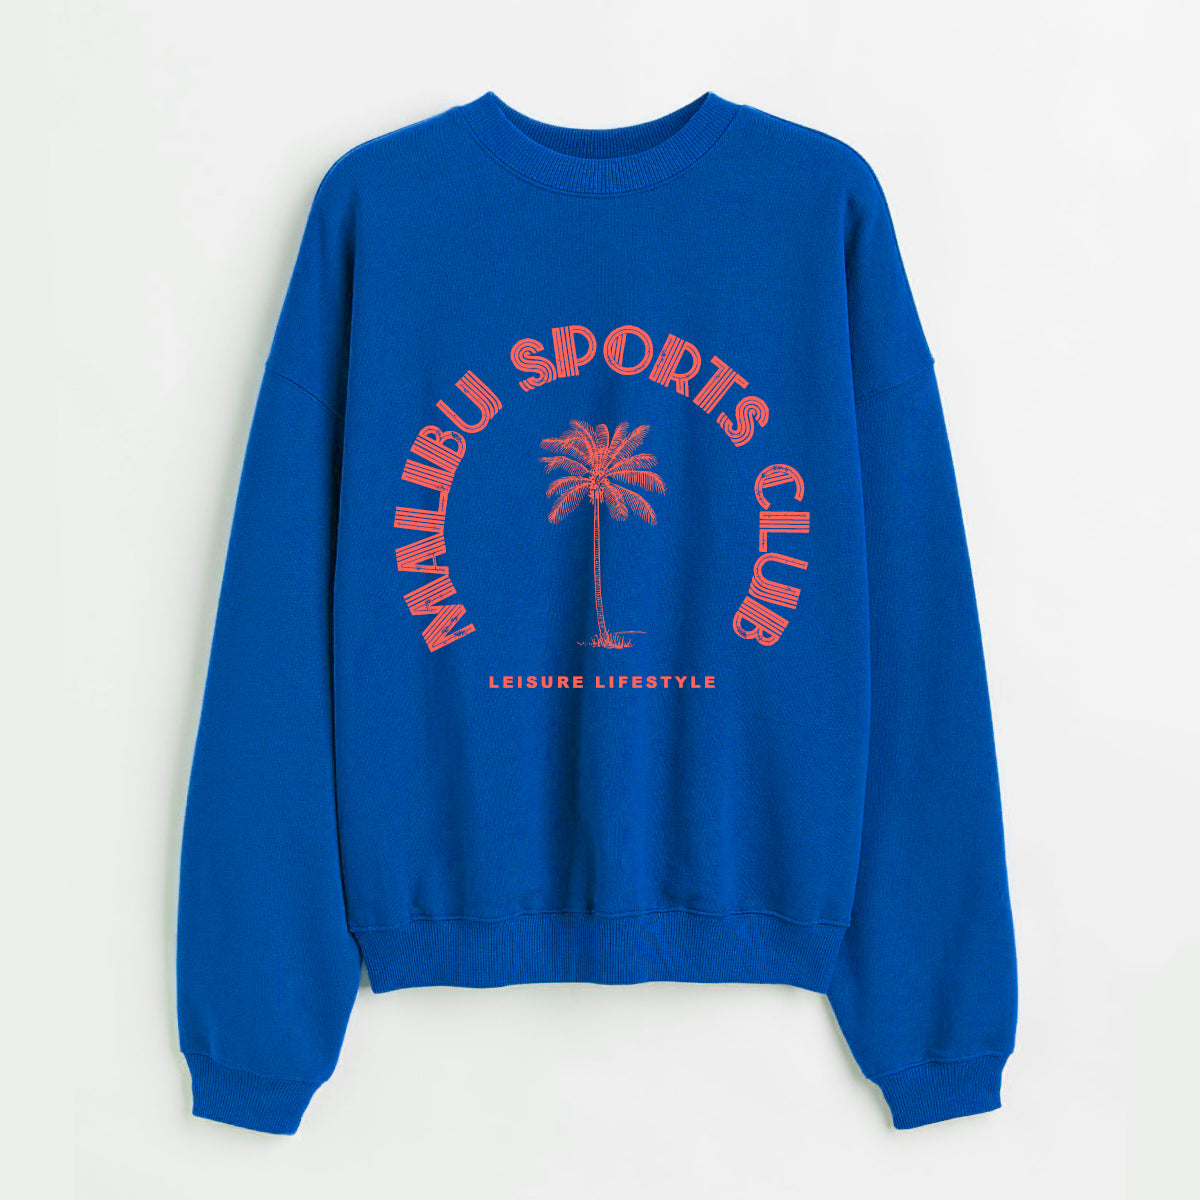 Malibu Sports Club Sweatshirt